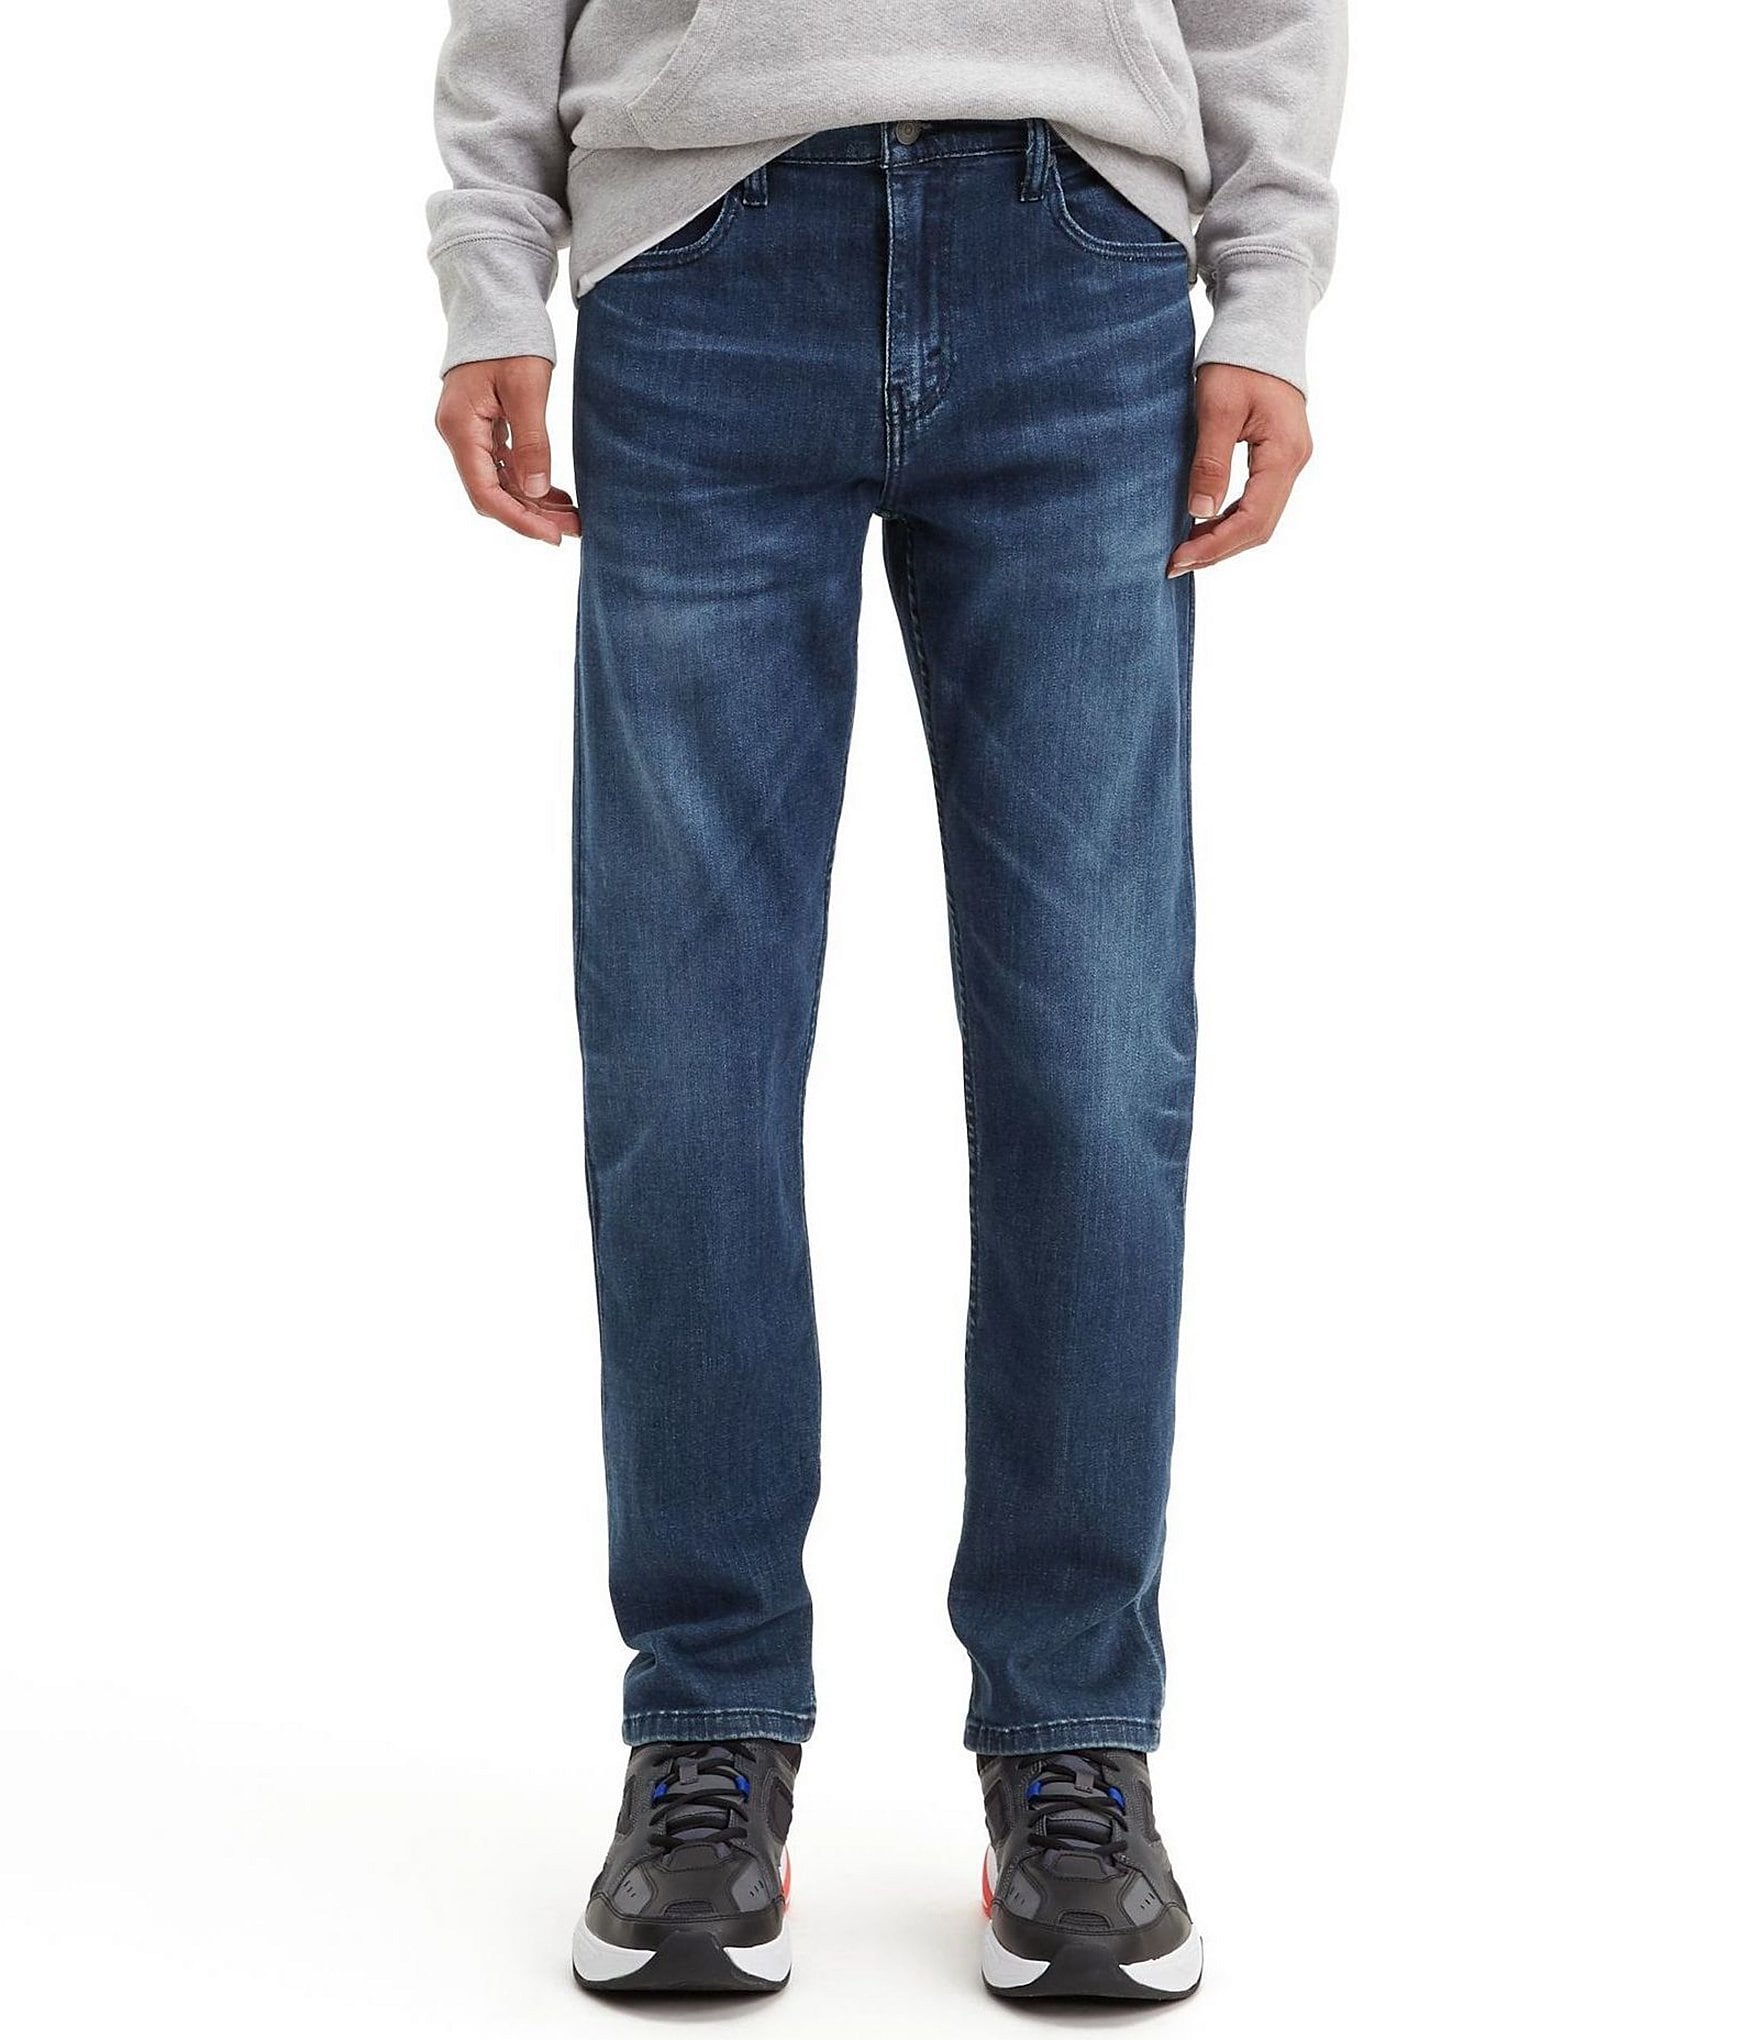 levis 502 stretch jeans